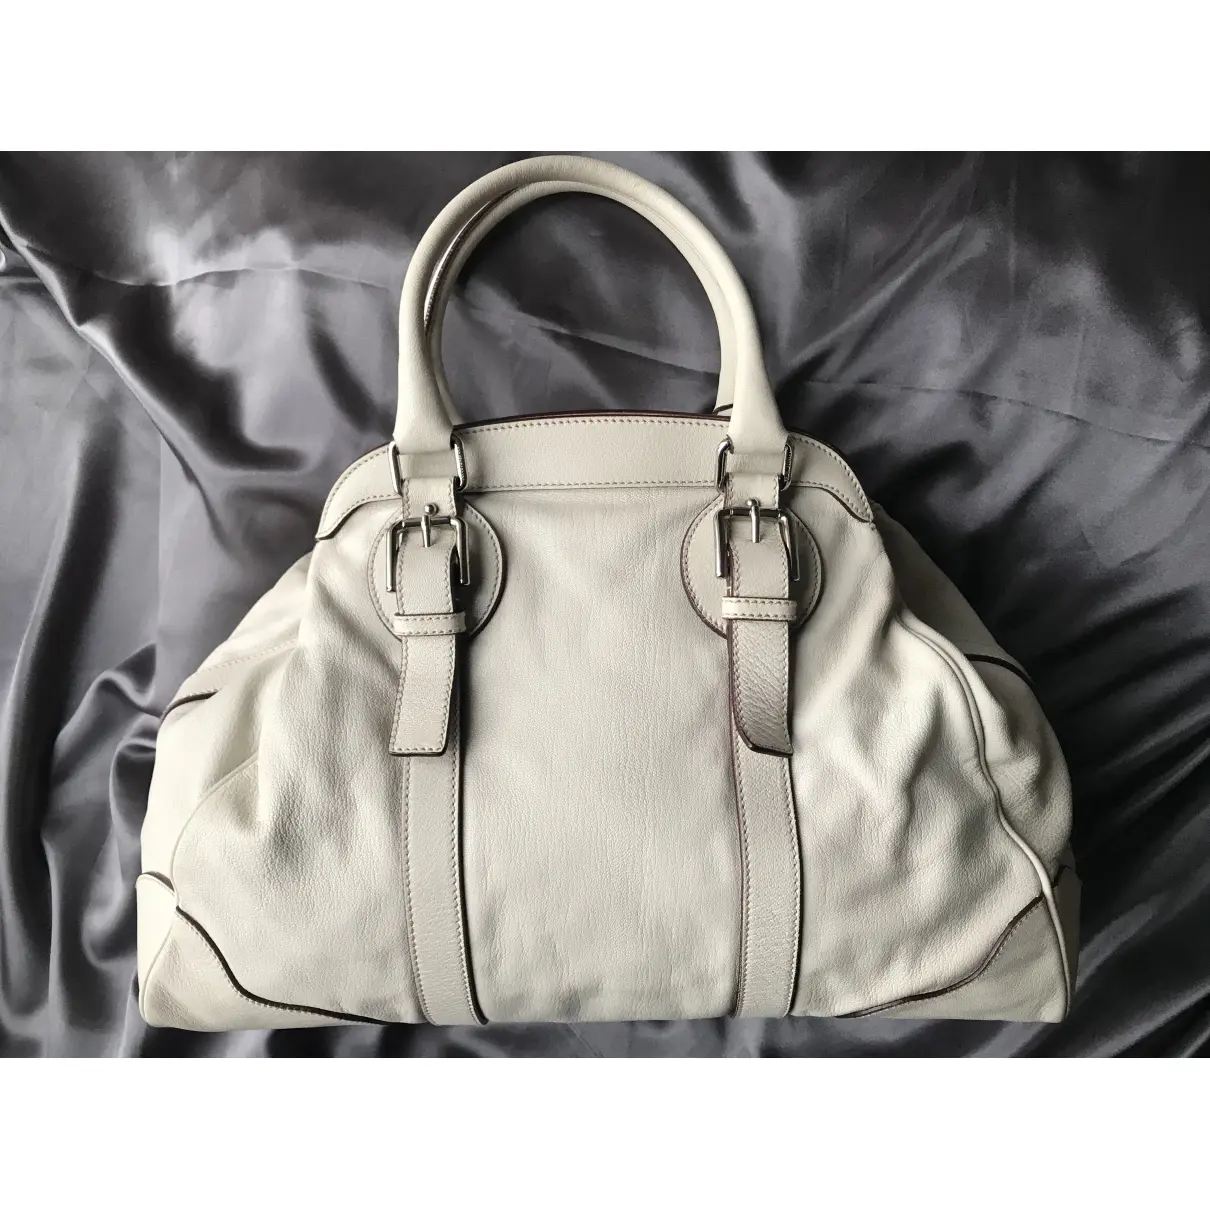 Buy Dolce & Gabbana Leather handbag online